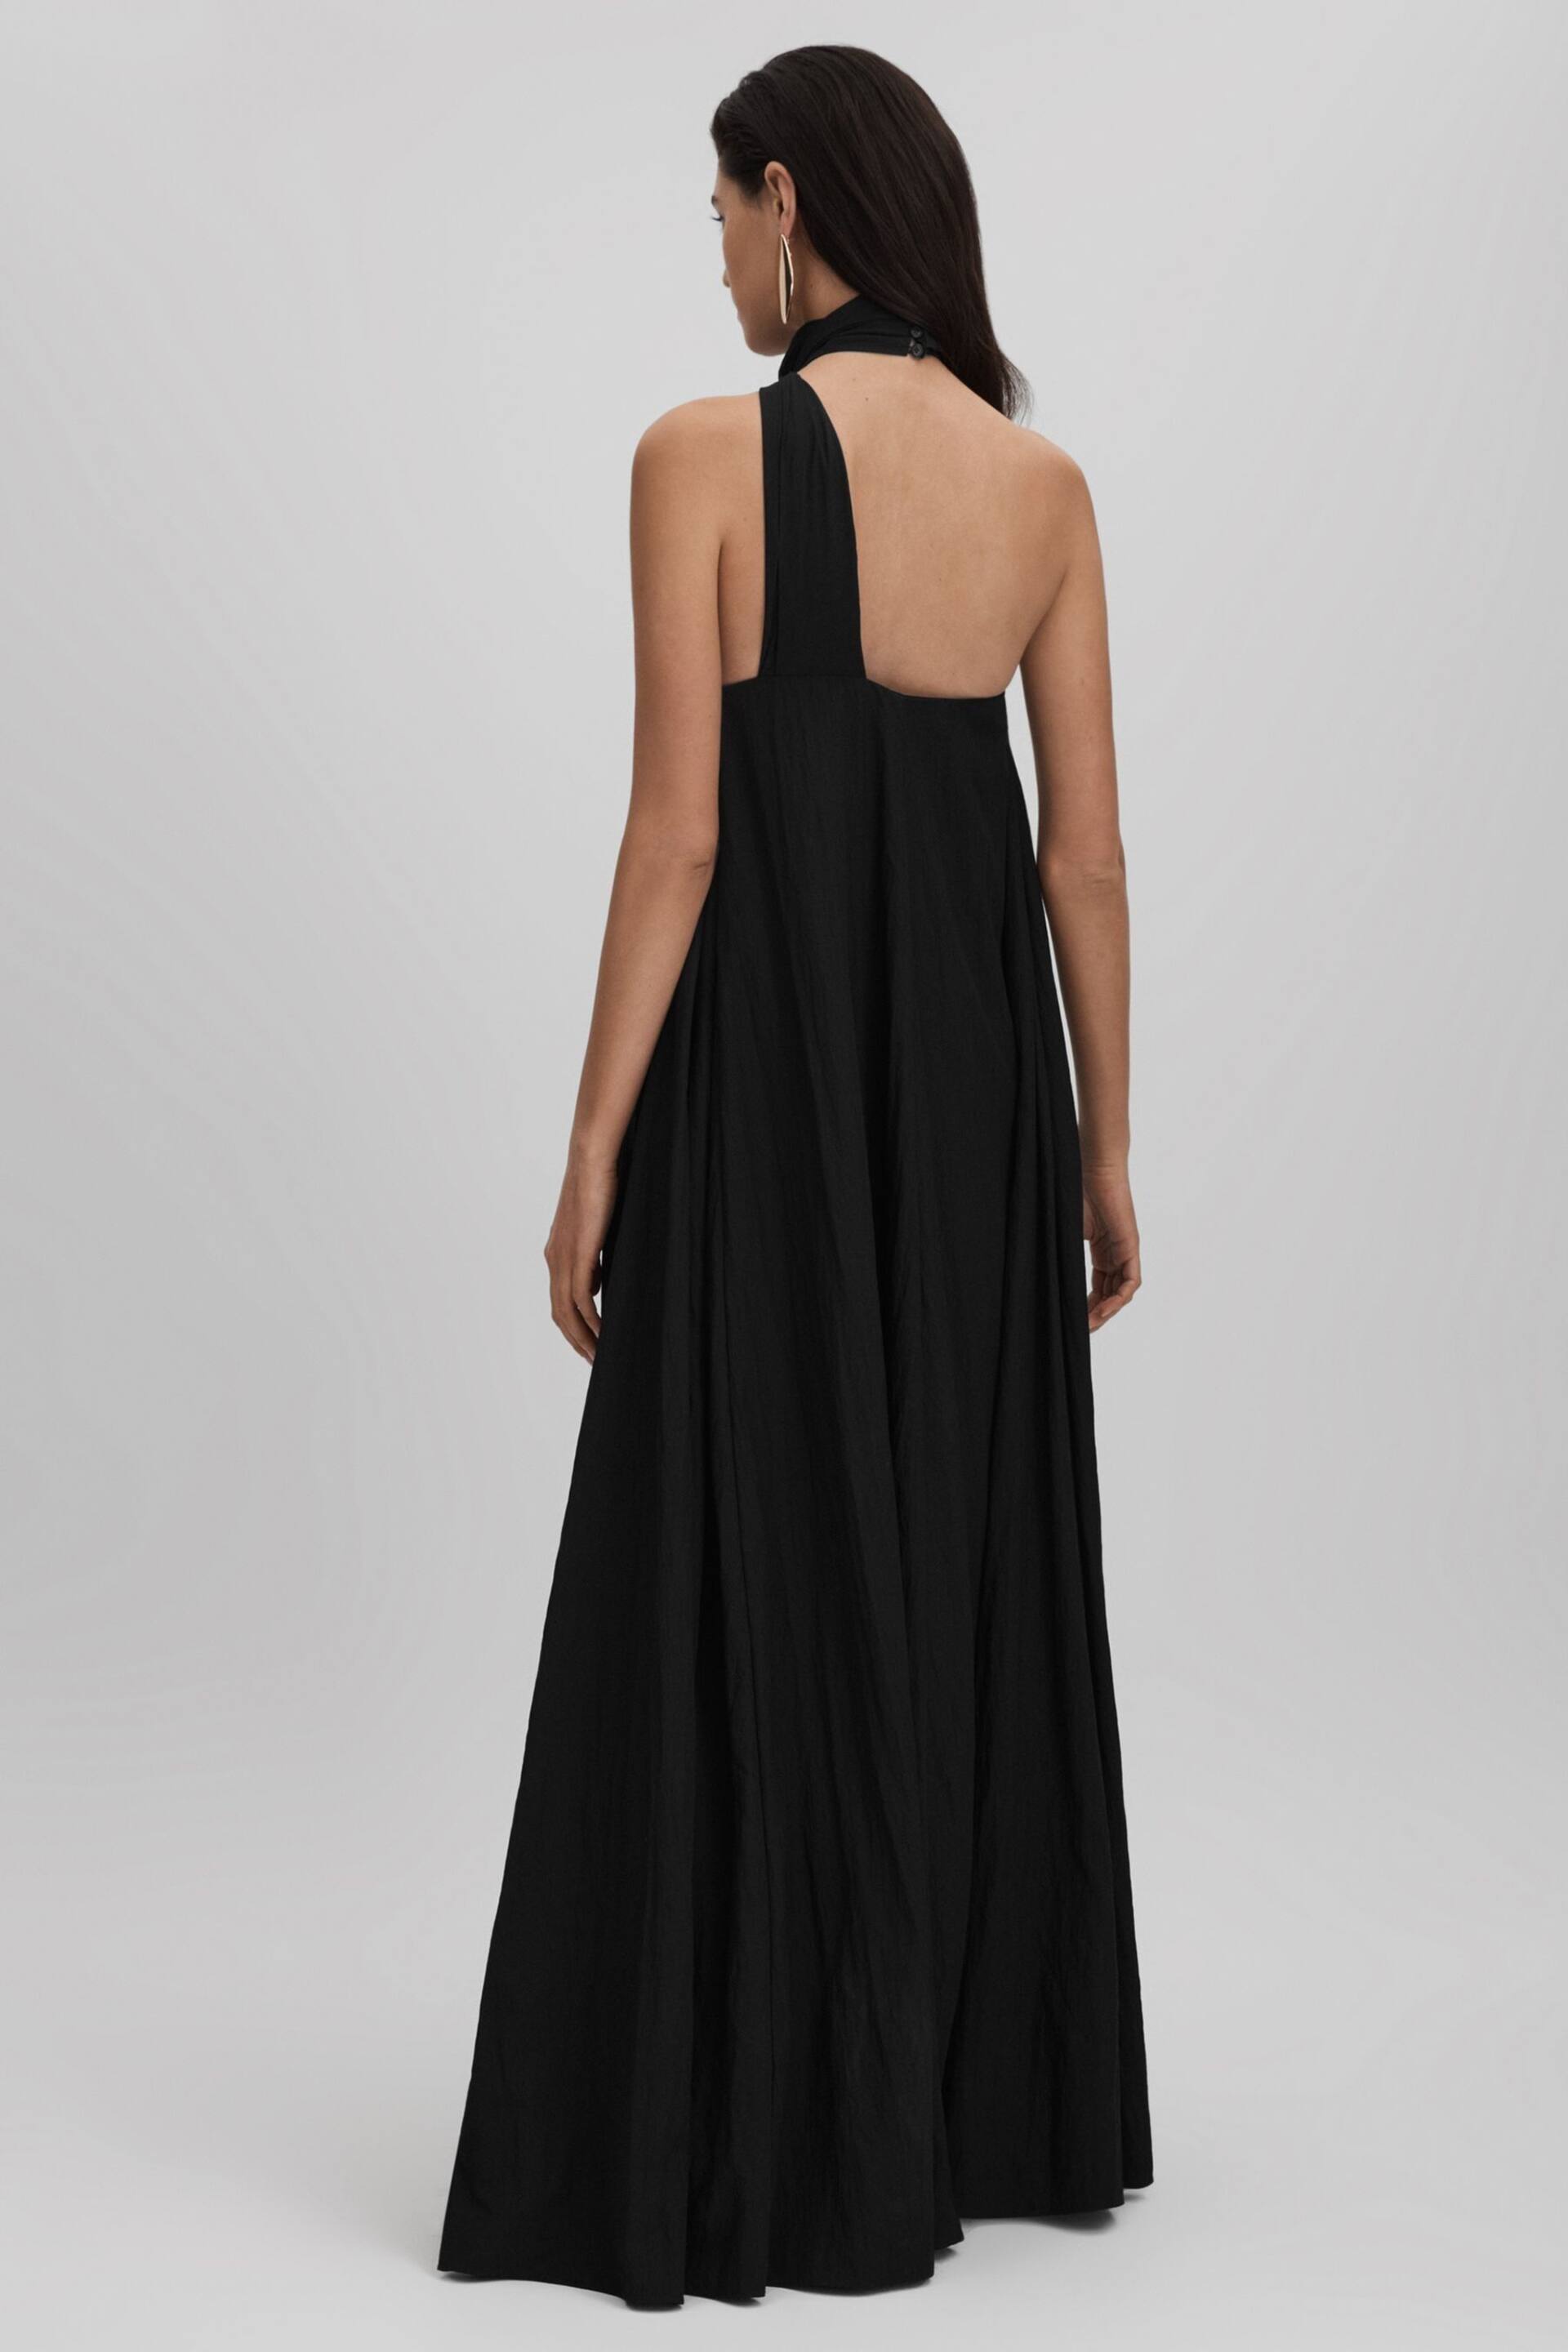 Reiss Black Phoebe Taffeta Halter Neck Maxi Dress - Image 4 of 6